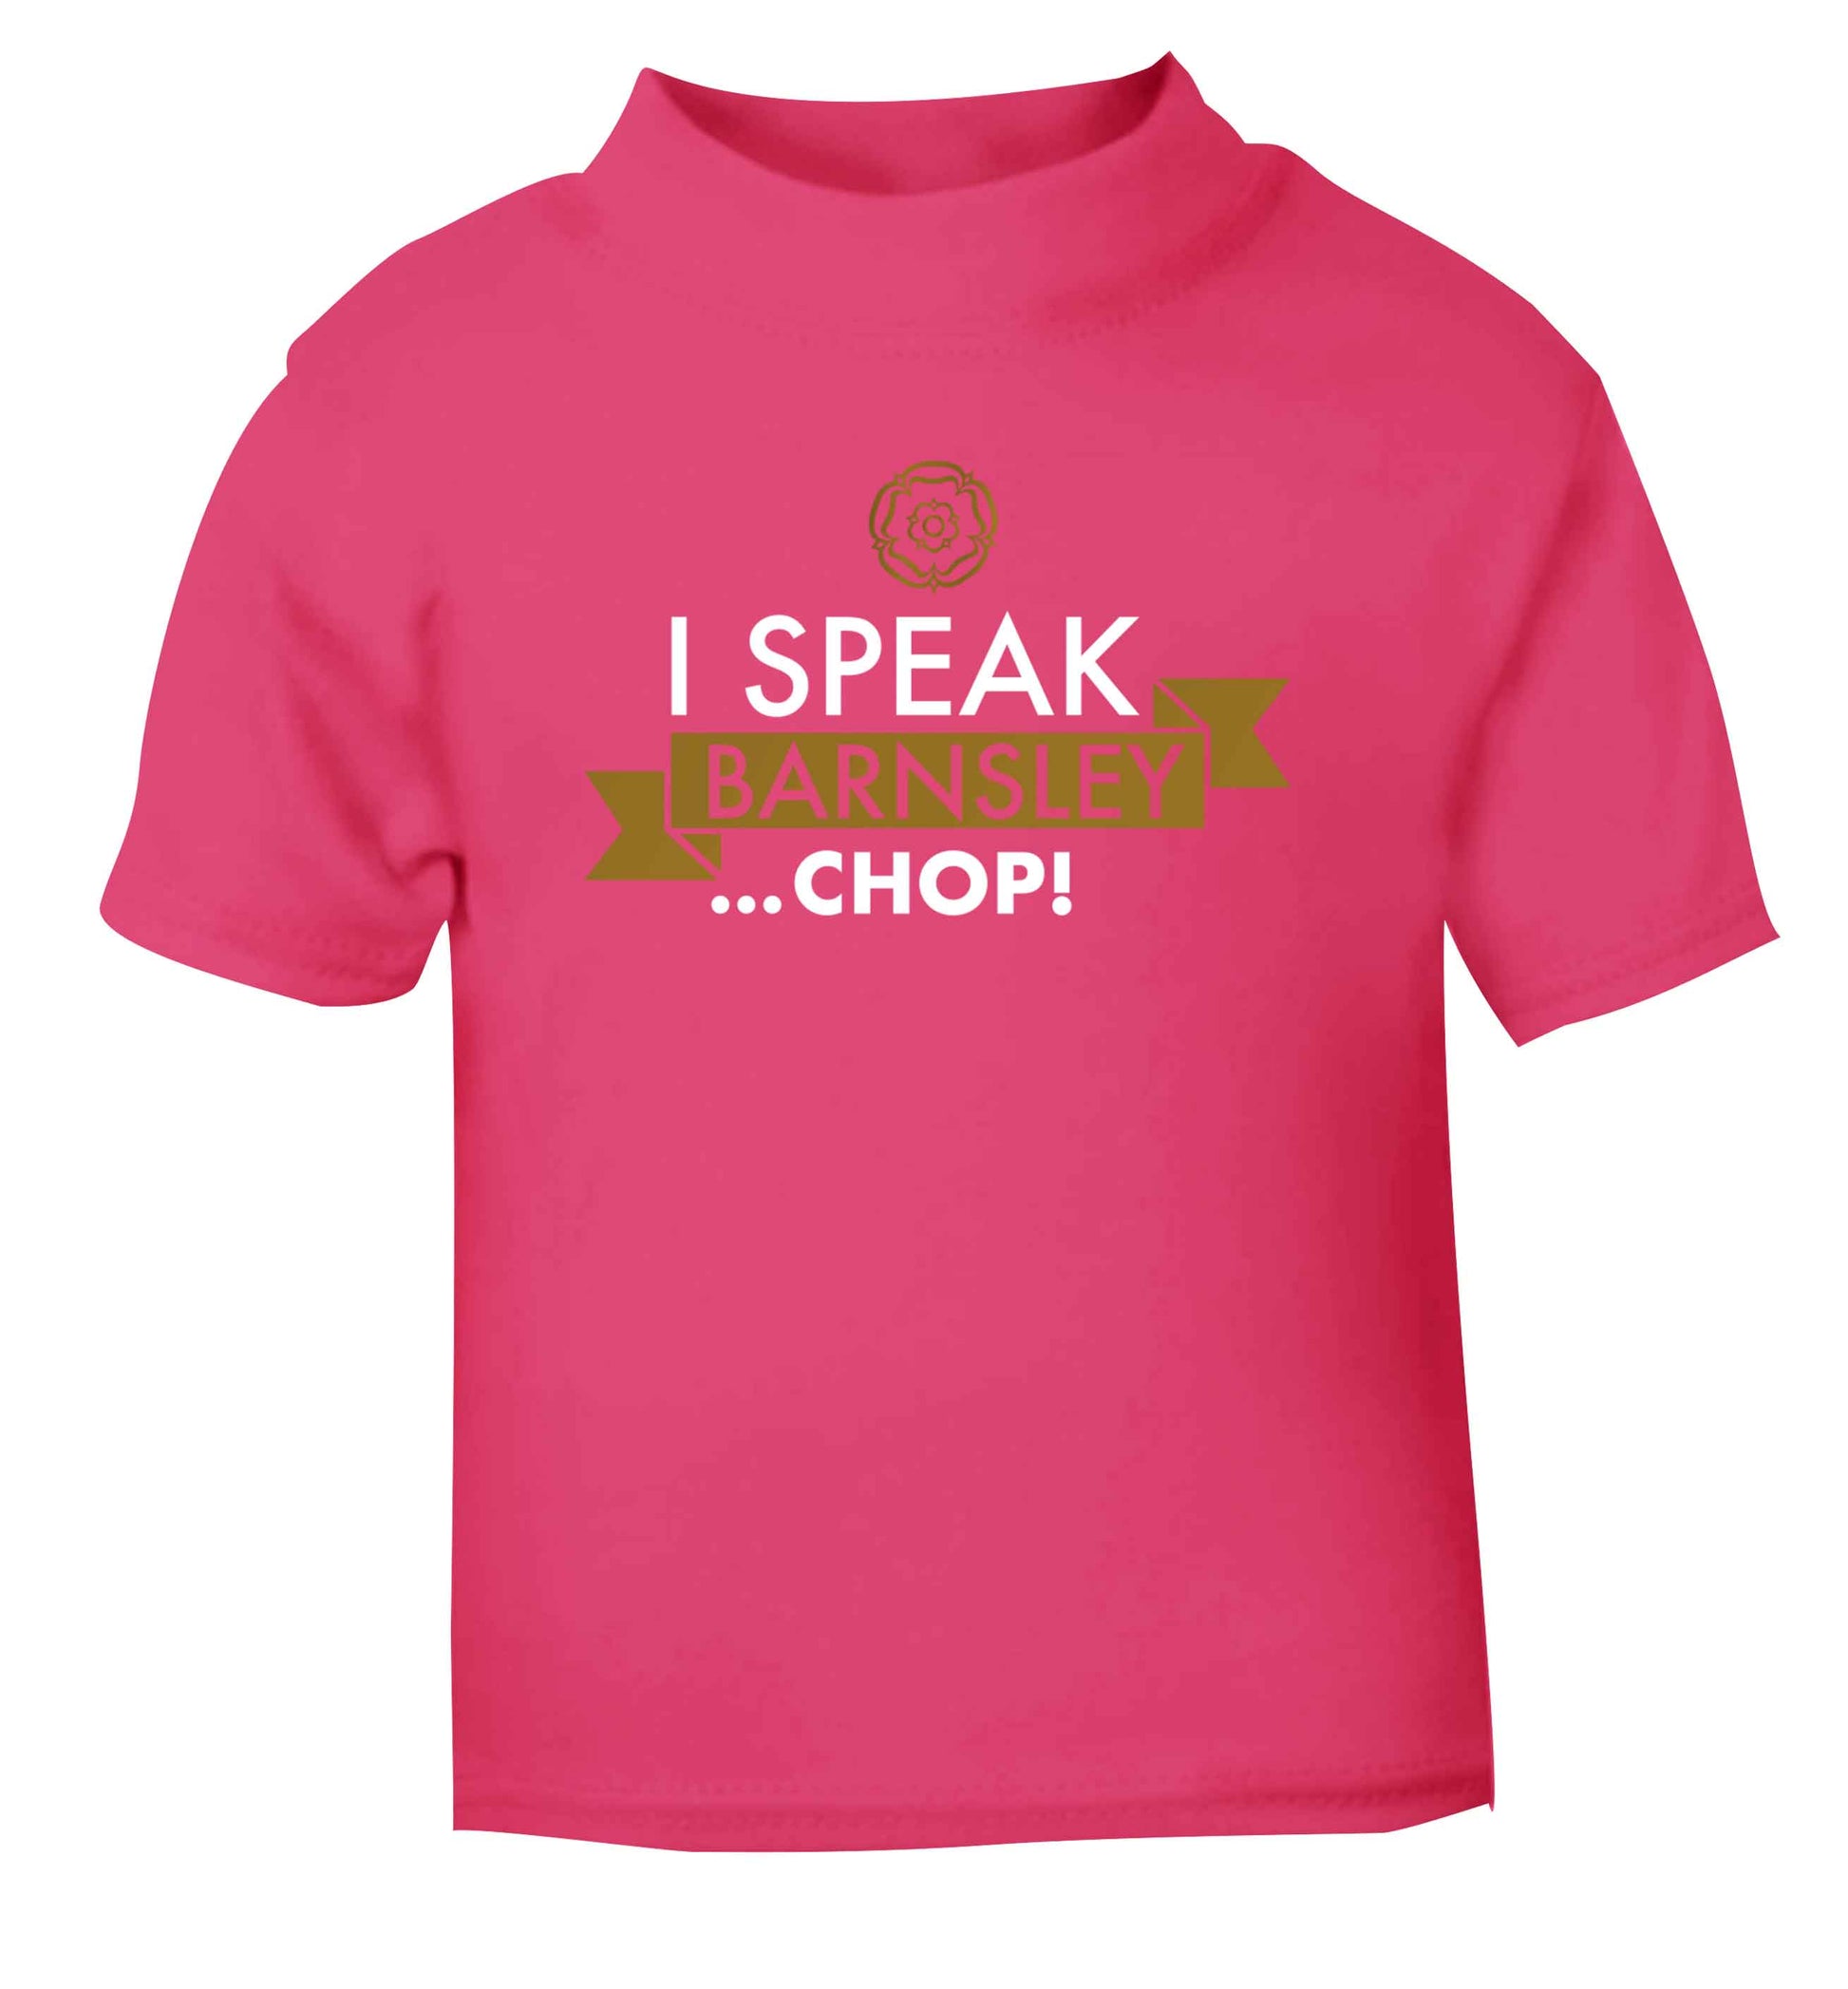 I speak Barnsley...chop! pink Baby Toddler Tshirt 2 Years